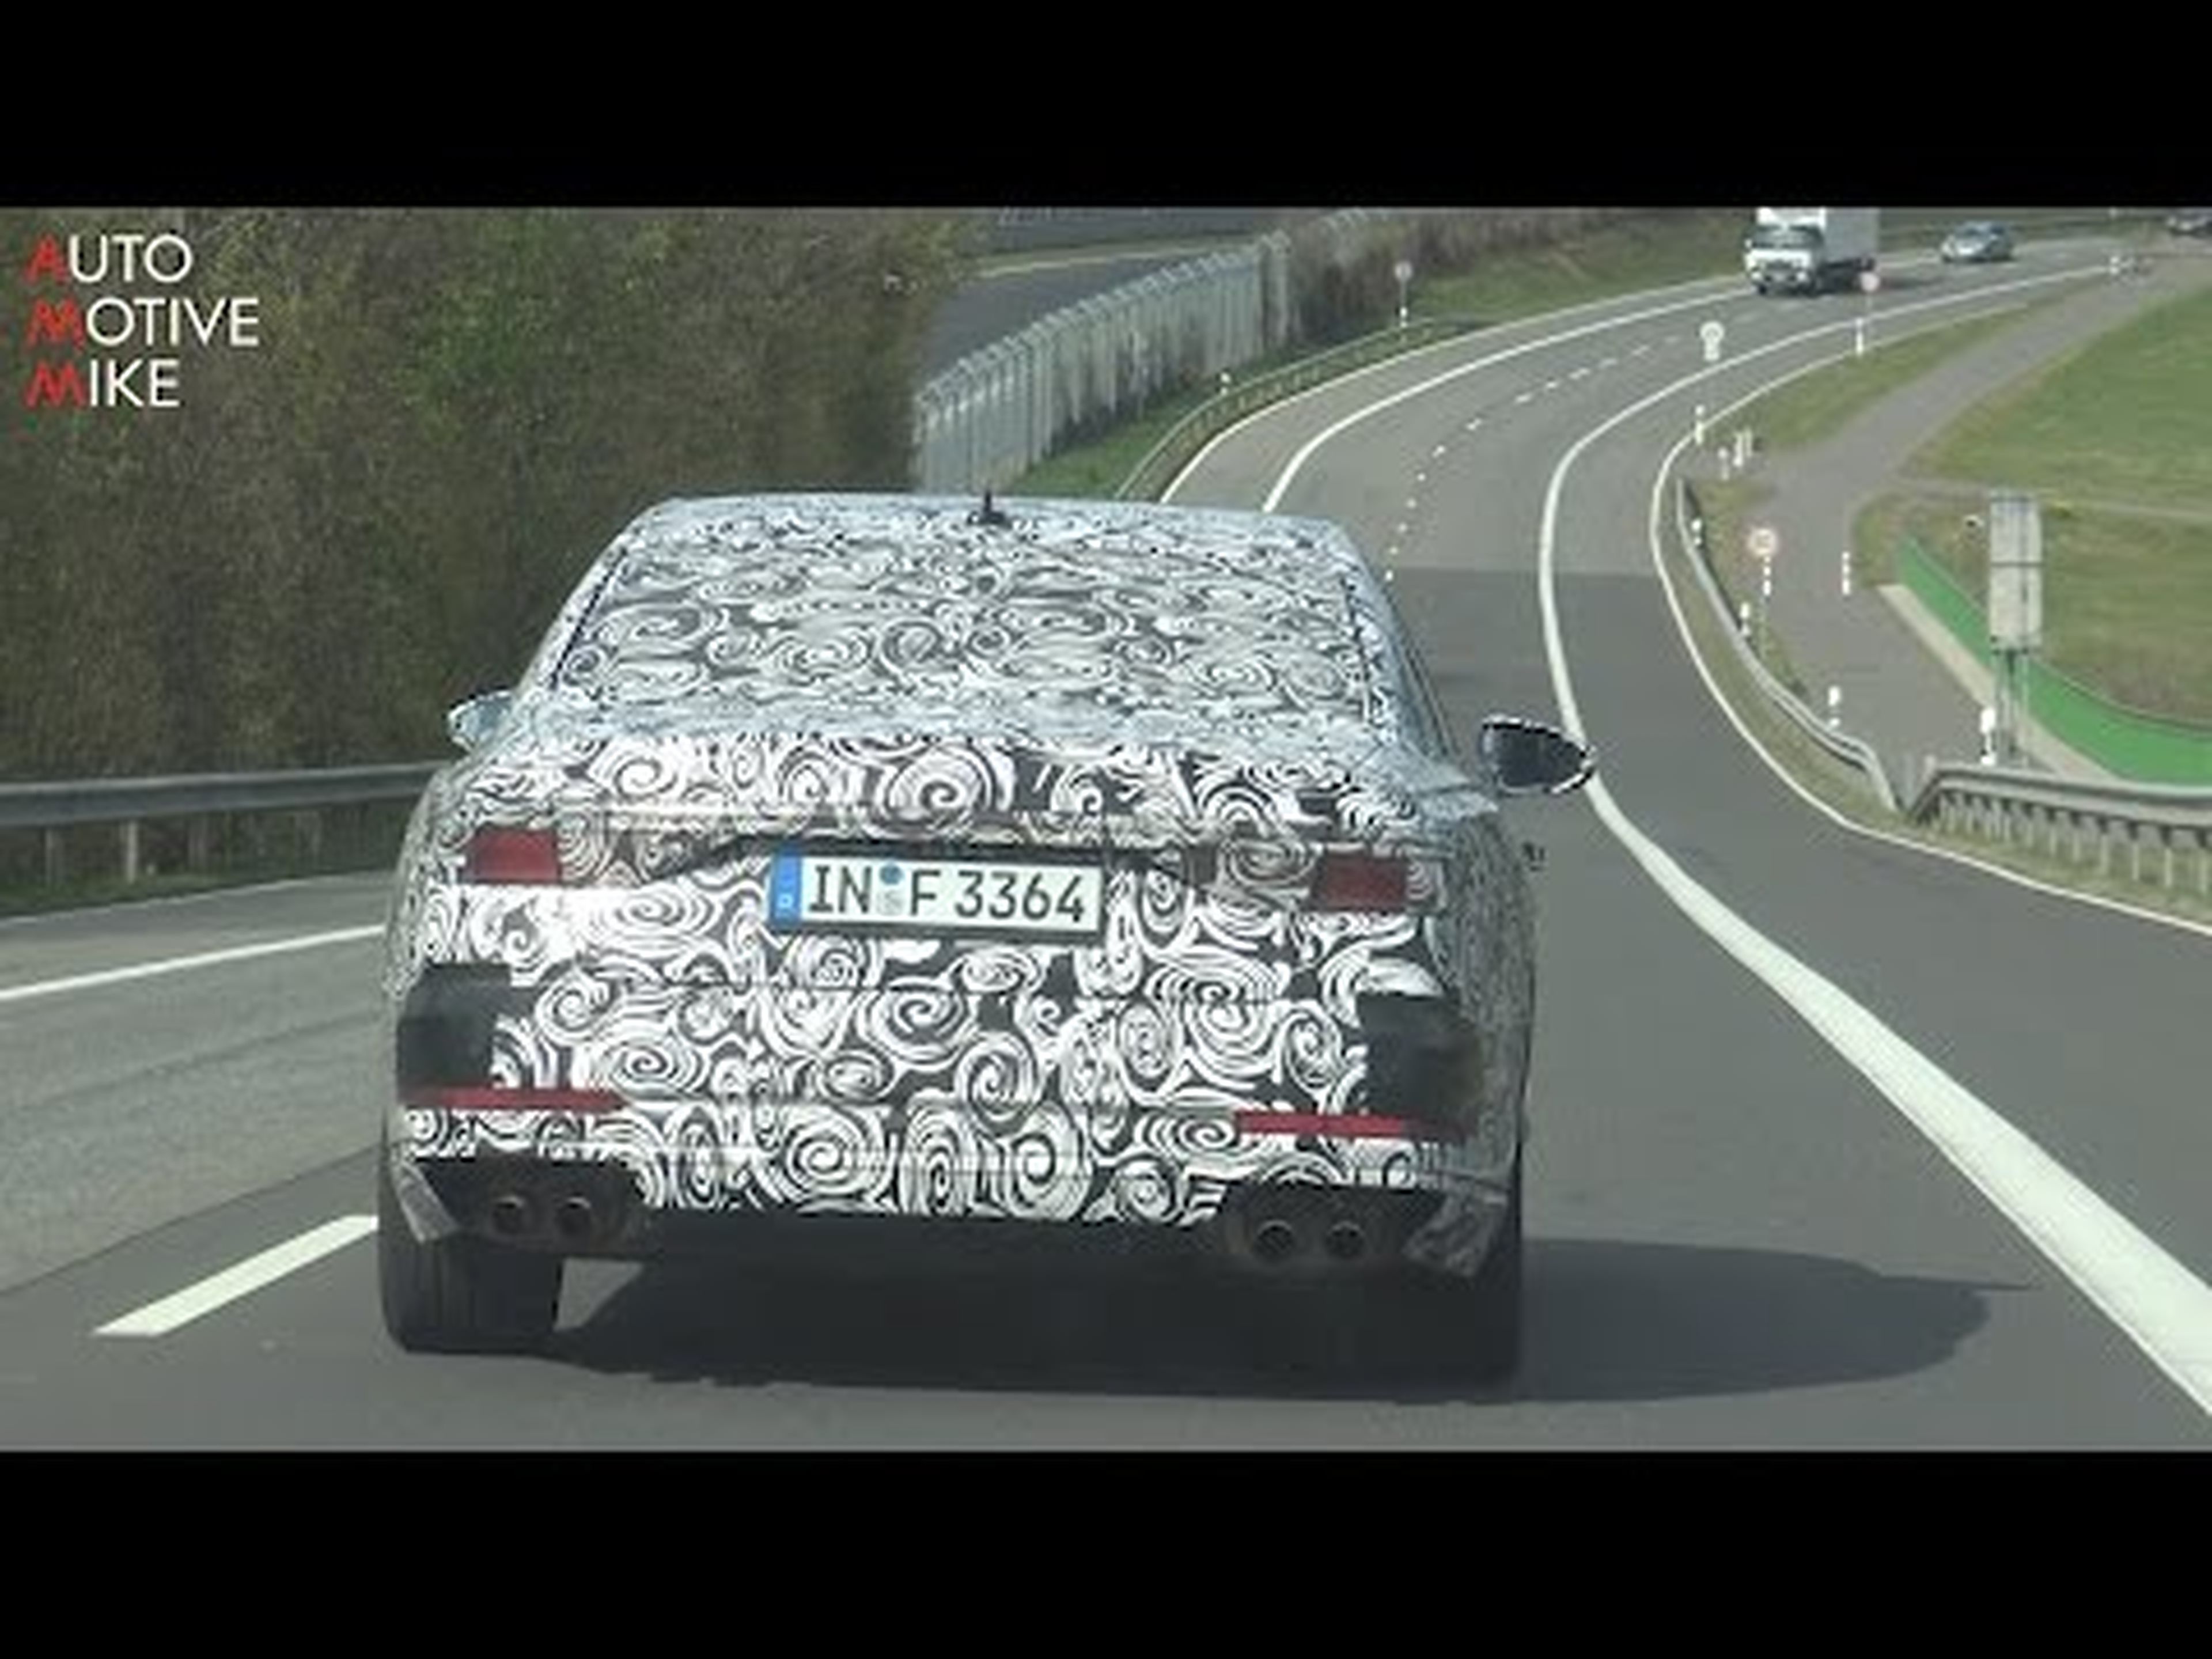 2019 Audi S8 spied testing at the Nürburgring